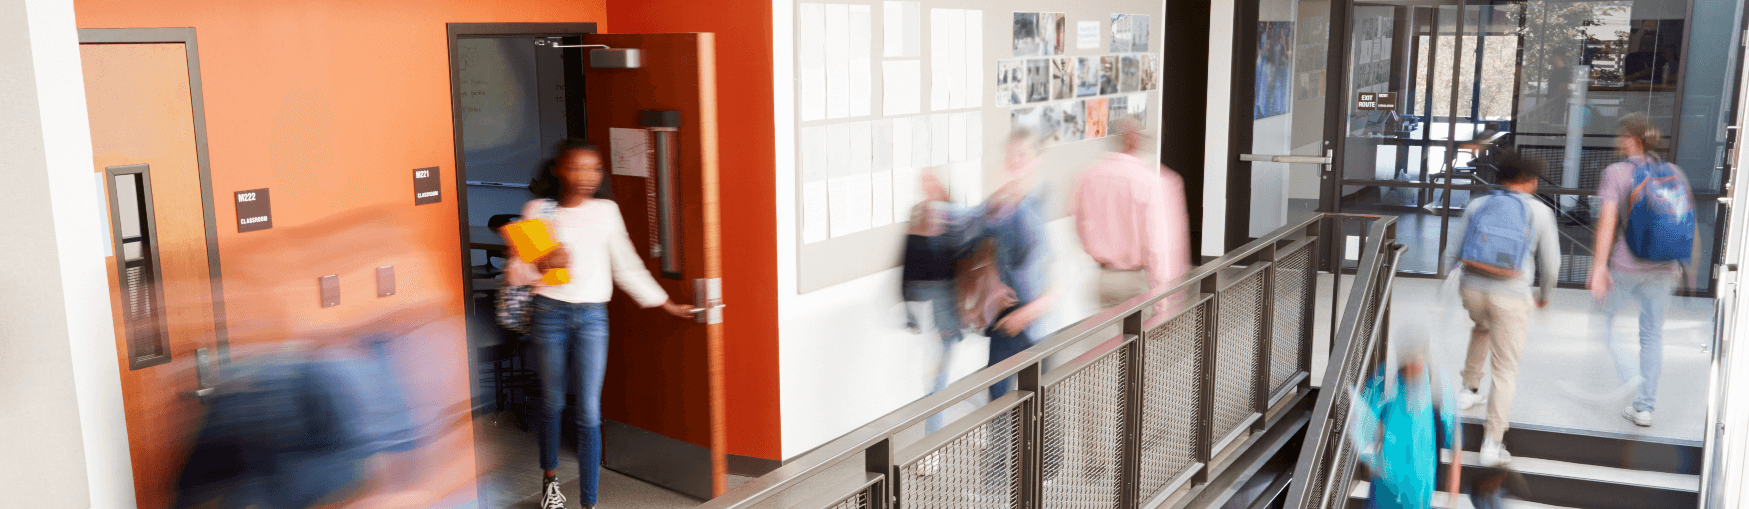 Students walking in a school hallway